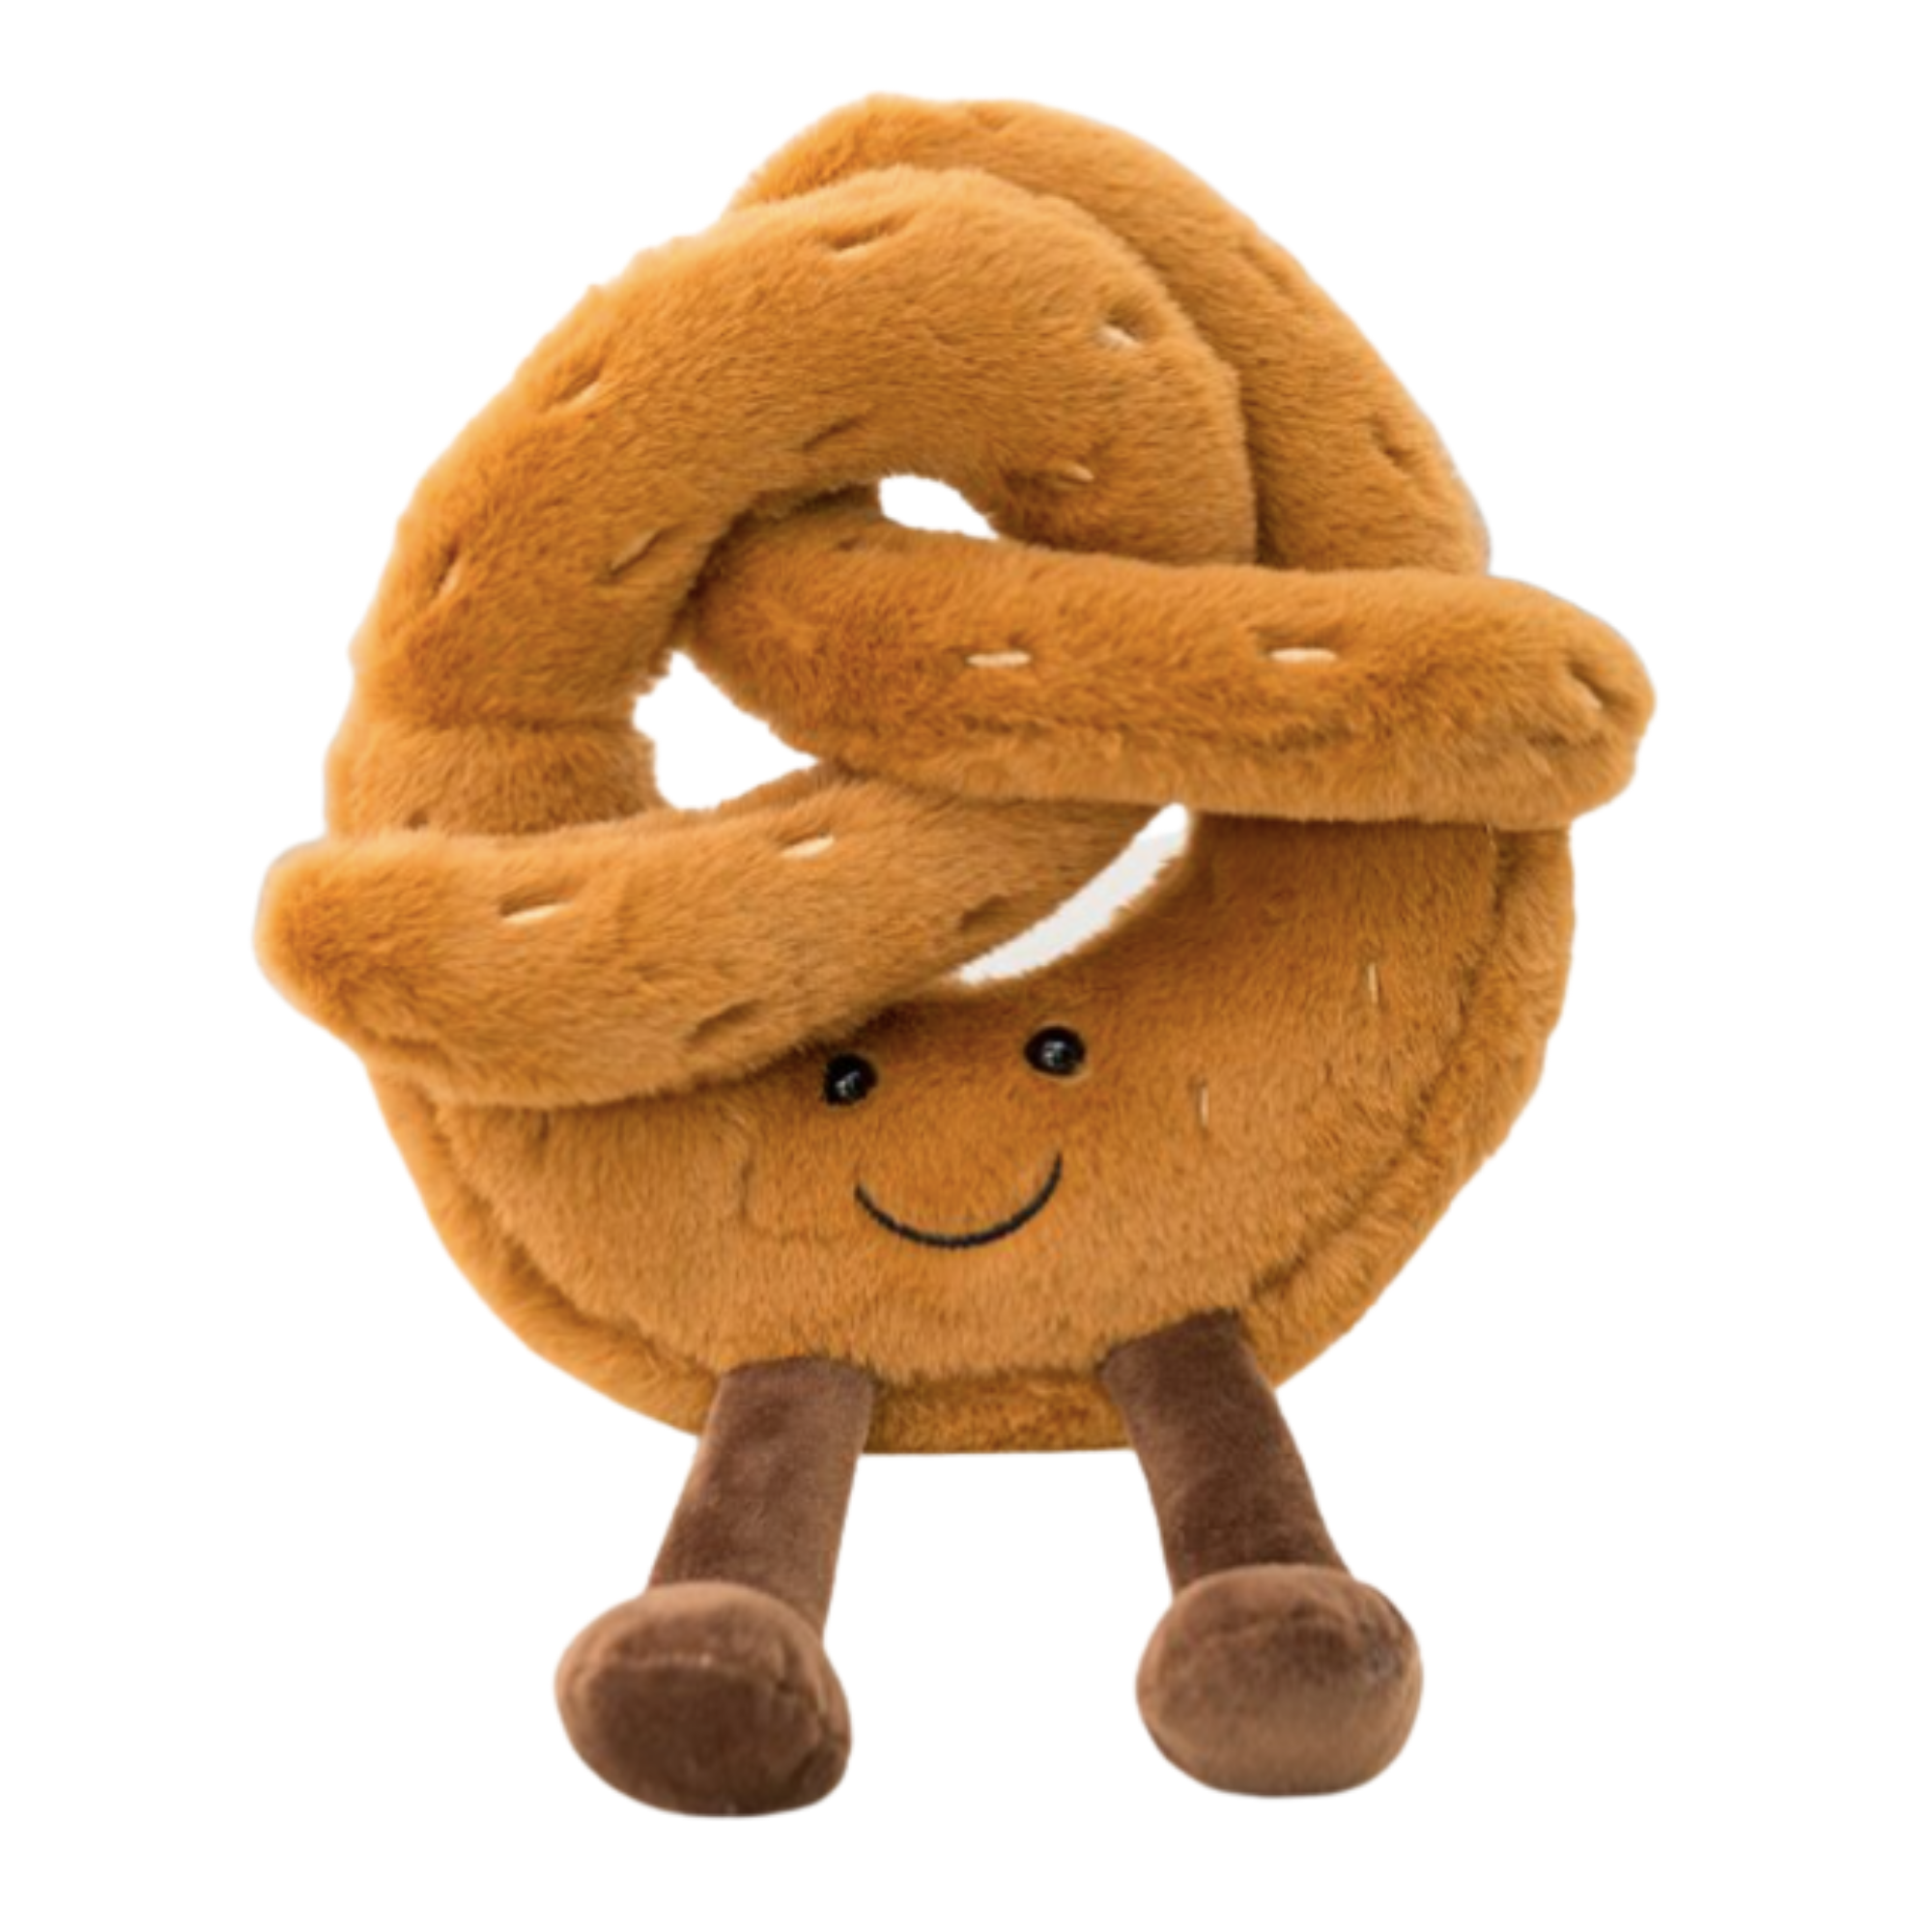 ToyalFriends - Pretzel Croissant Toast Bread Plush Toy